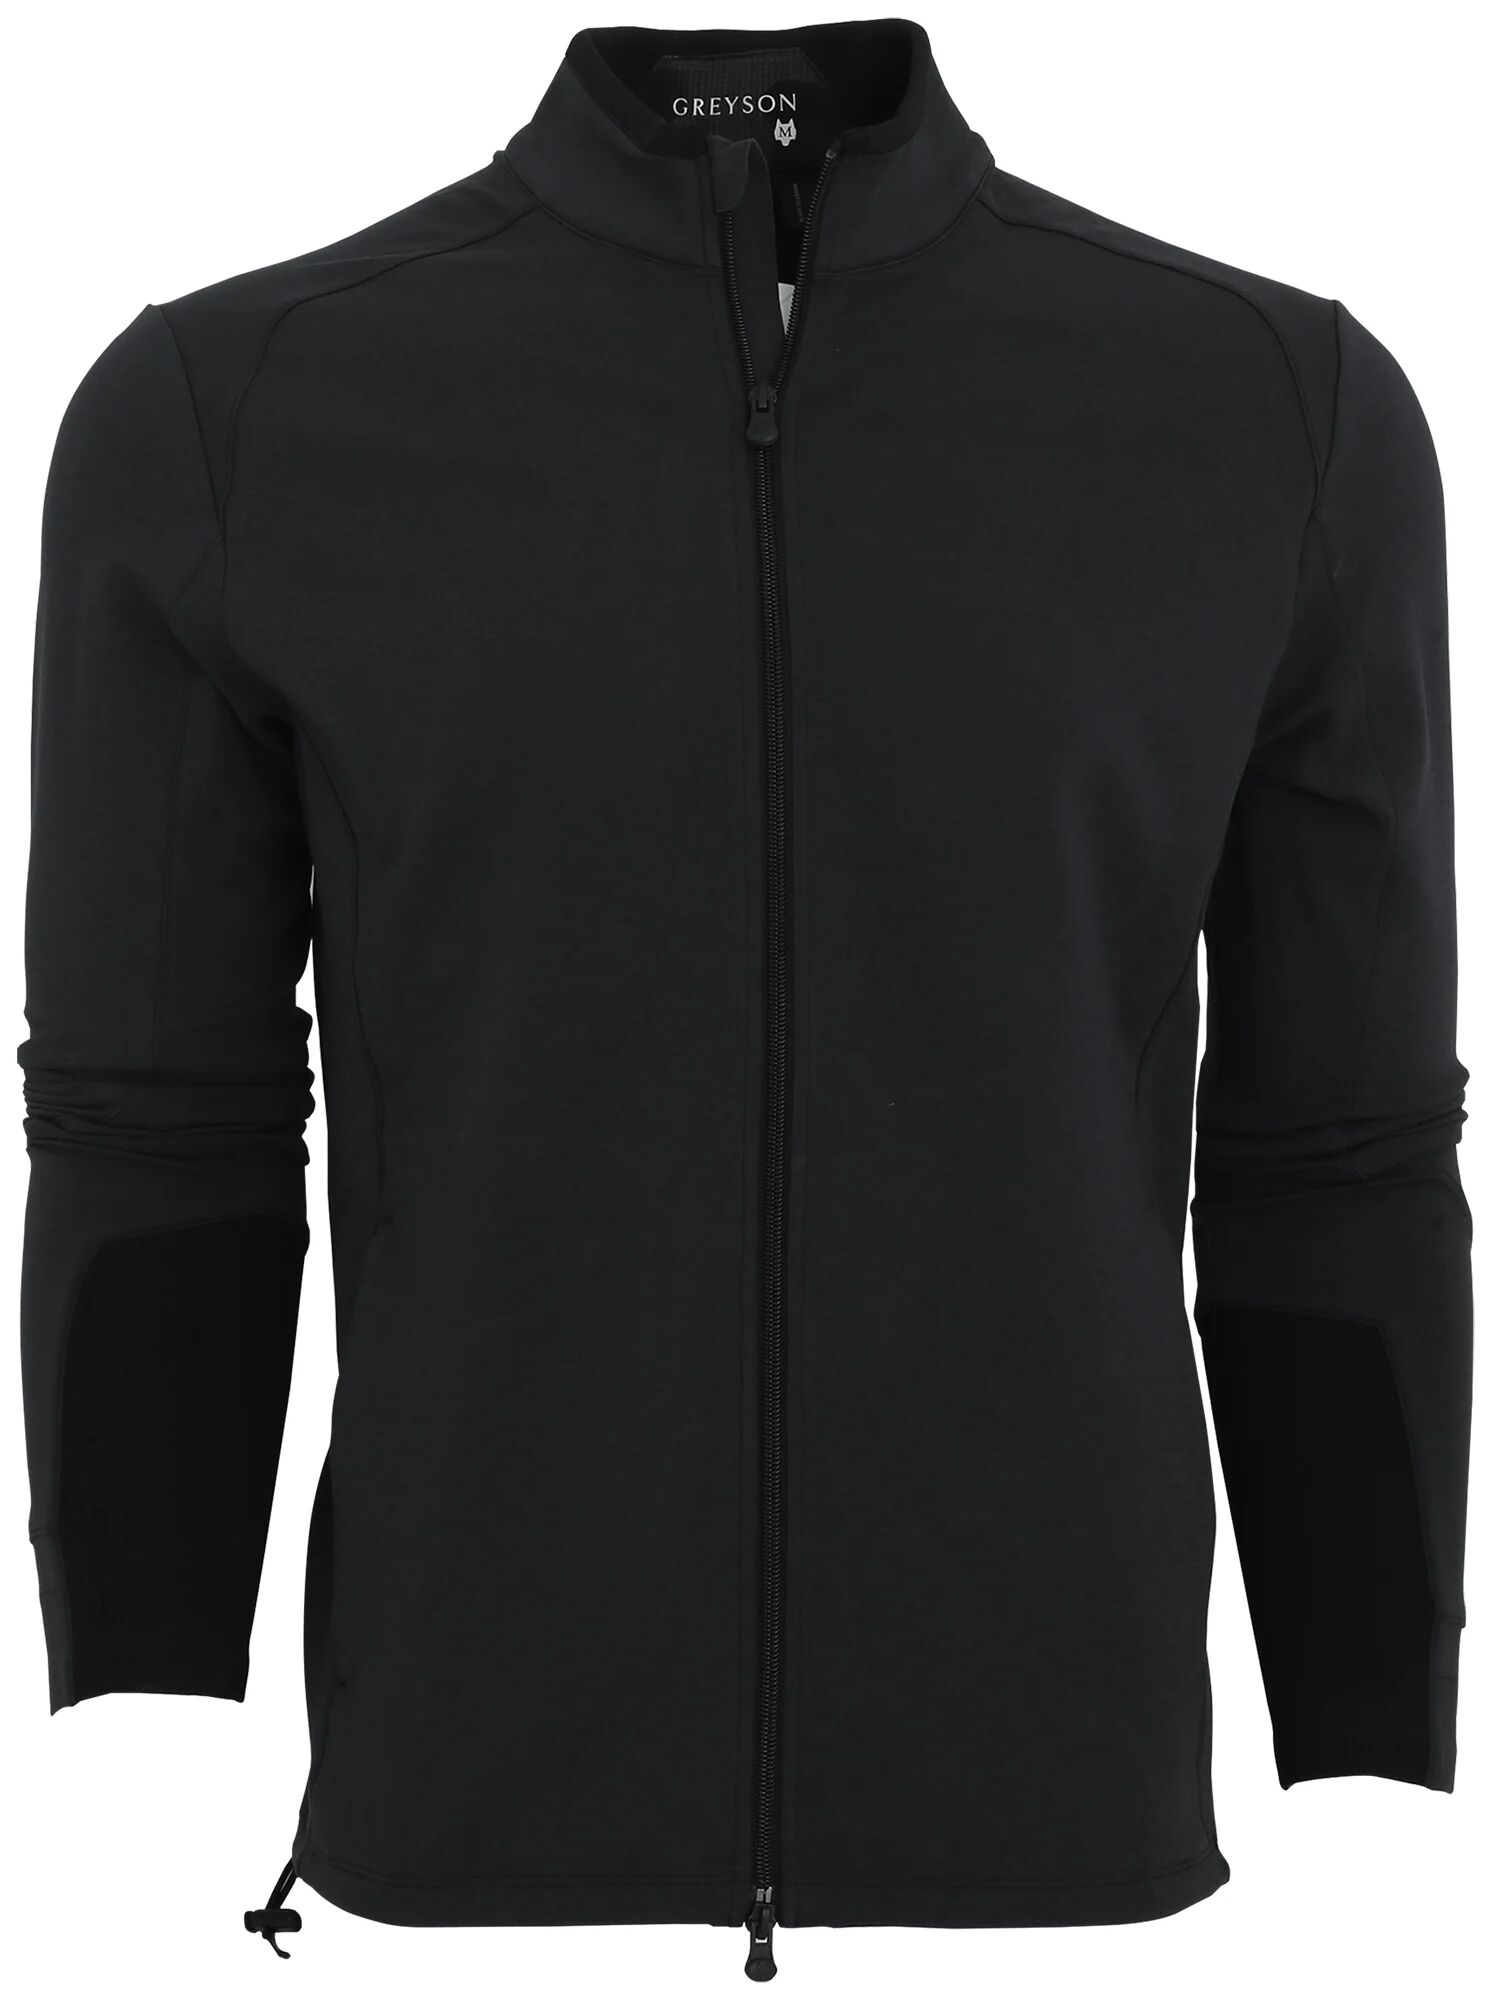 Greyson Clothiers Greyson Sequoia Full Zip Men's Golf Jacket - Black, Size: Medium